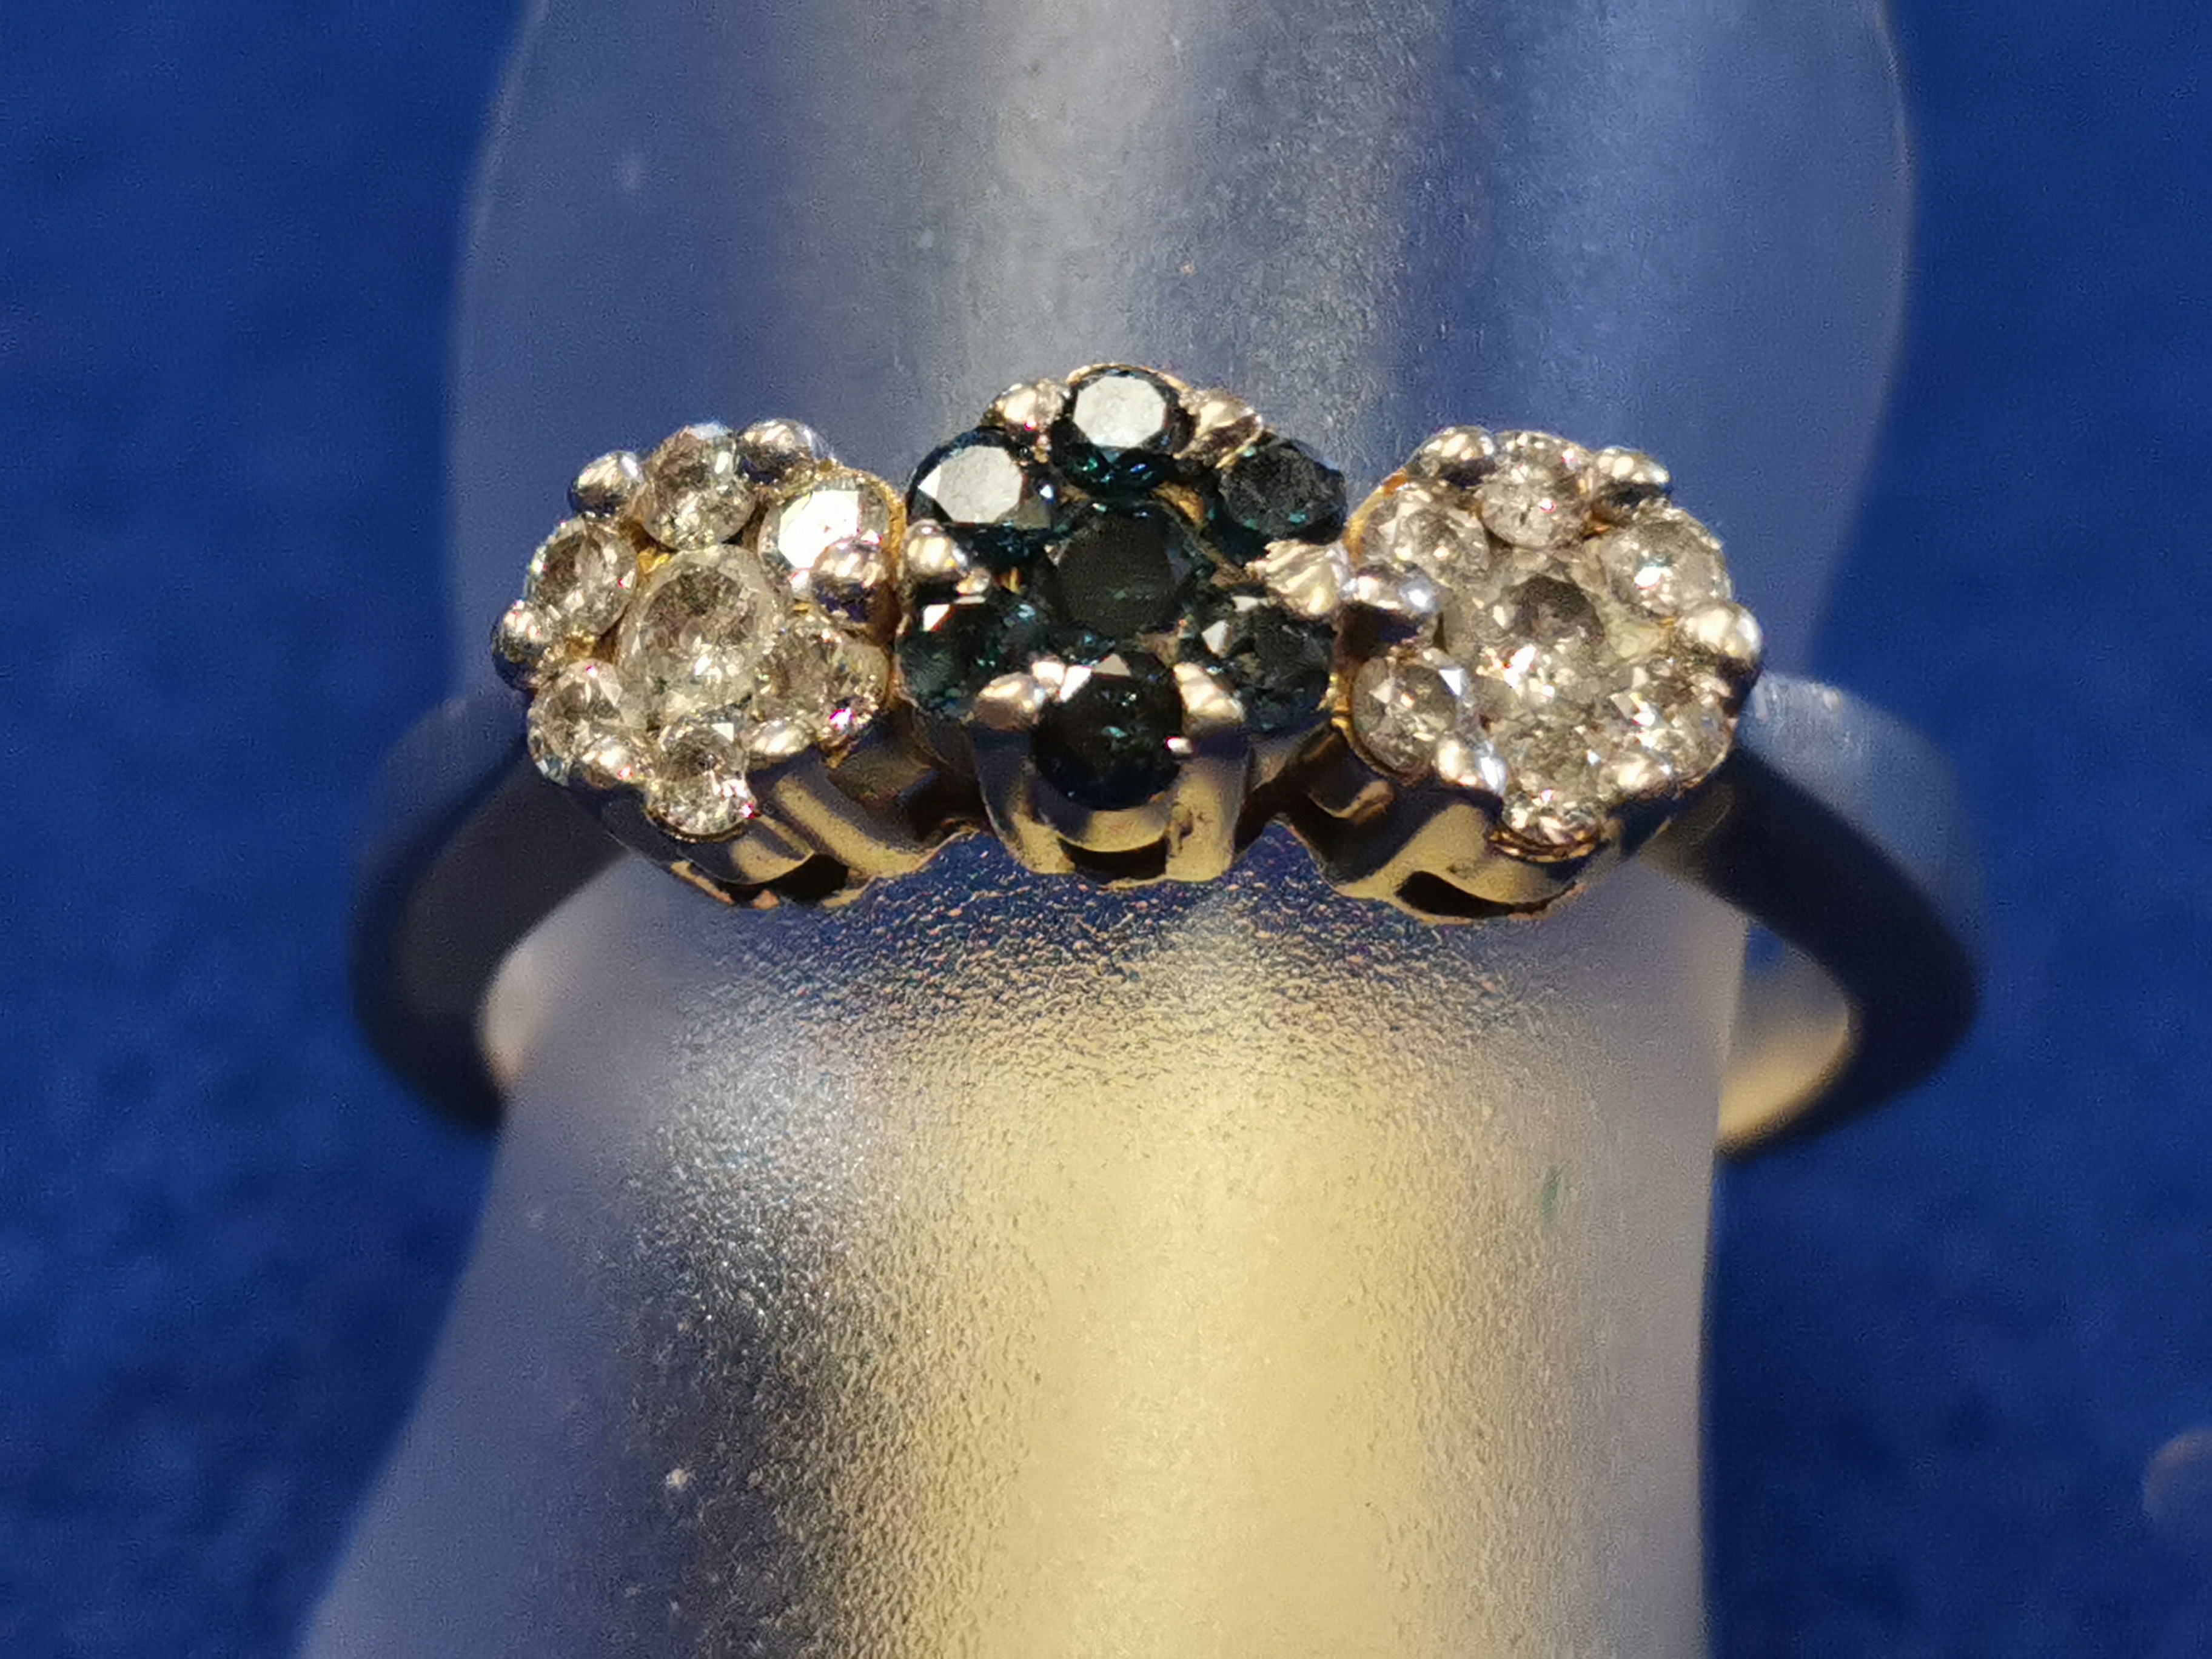 9ct Gold White Diamond & Emerald Ring, size L